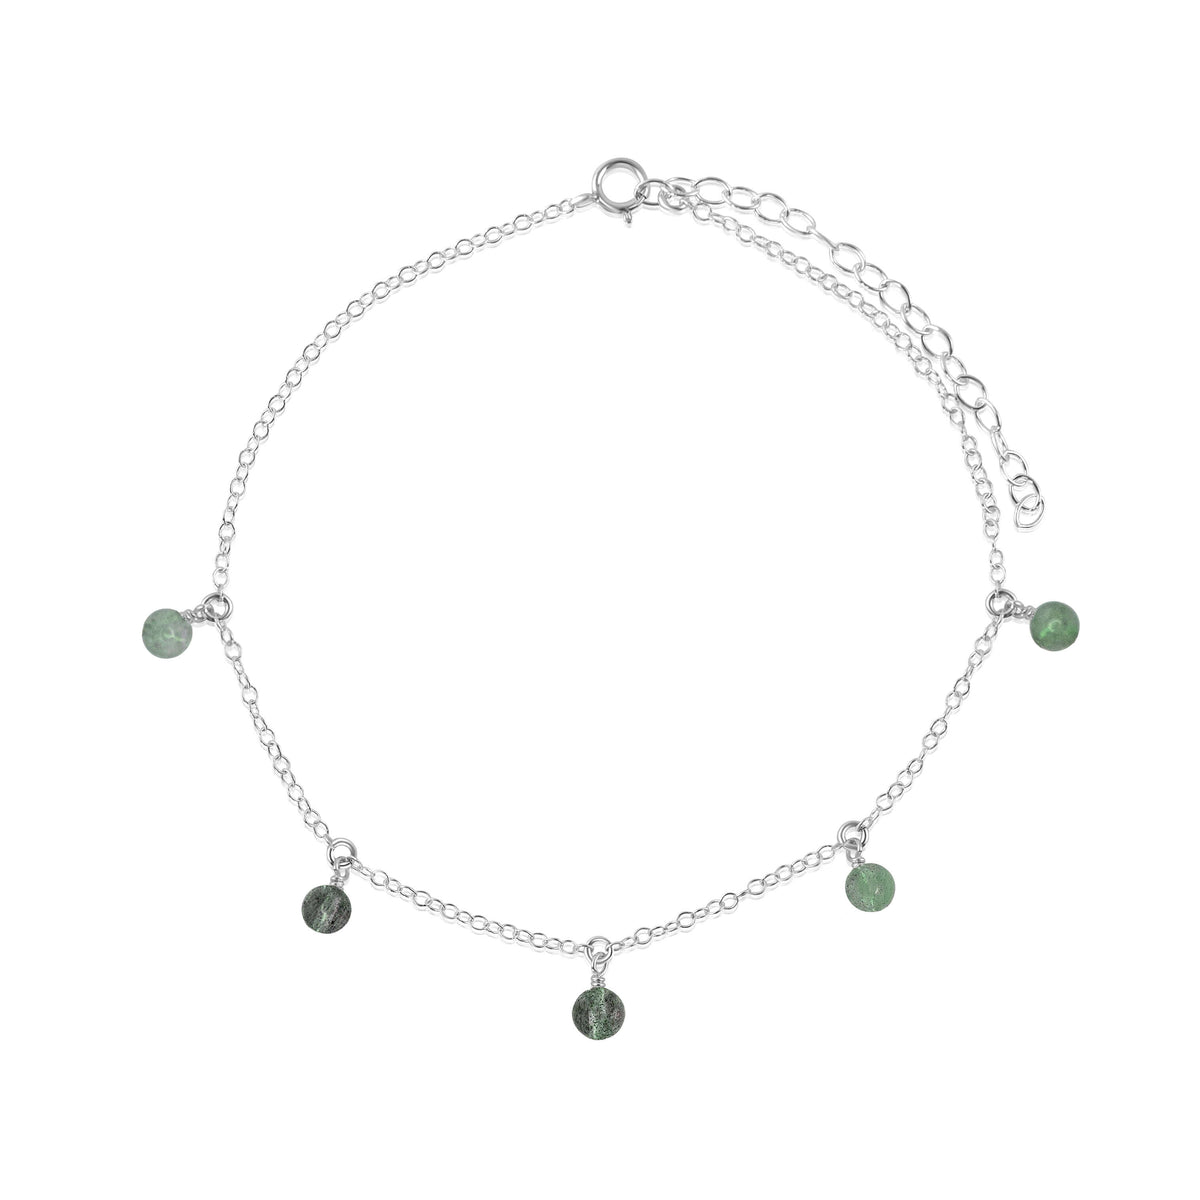 Bead Drop Anklet - Labradorite - Sterling Silver - Luna Tide Handmade Jewellery